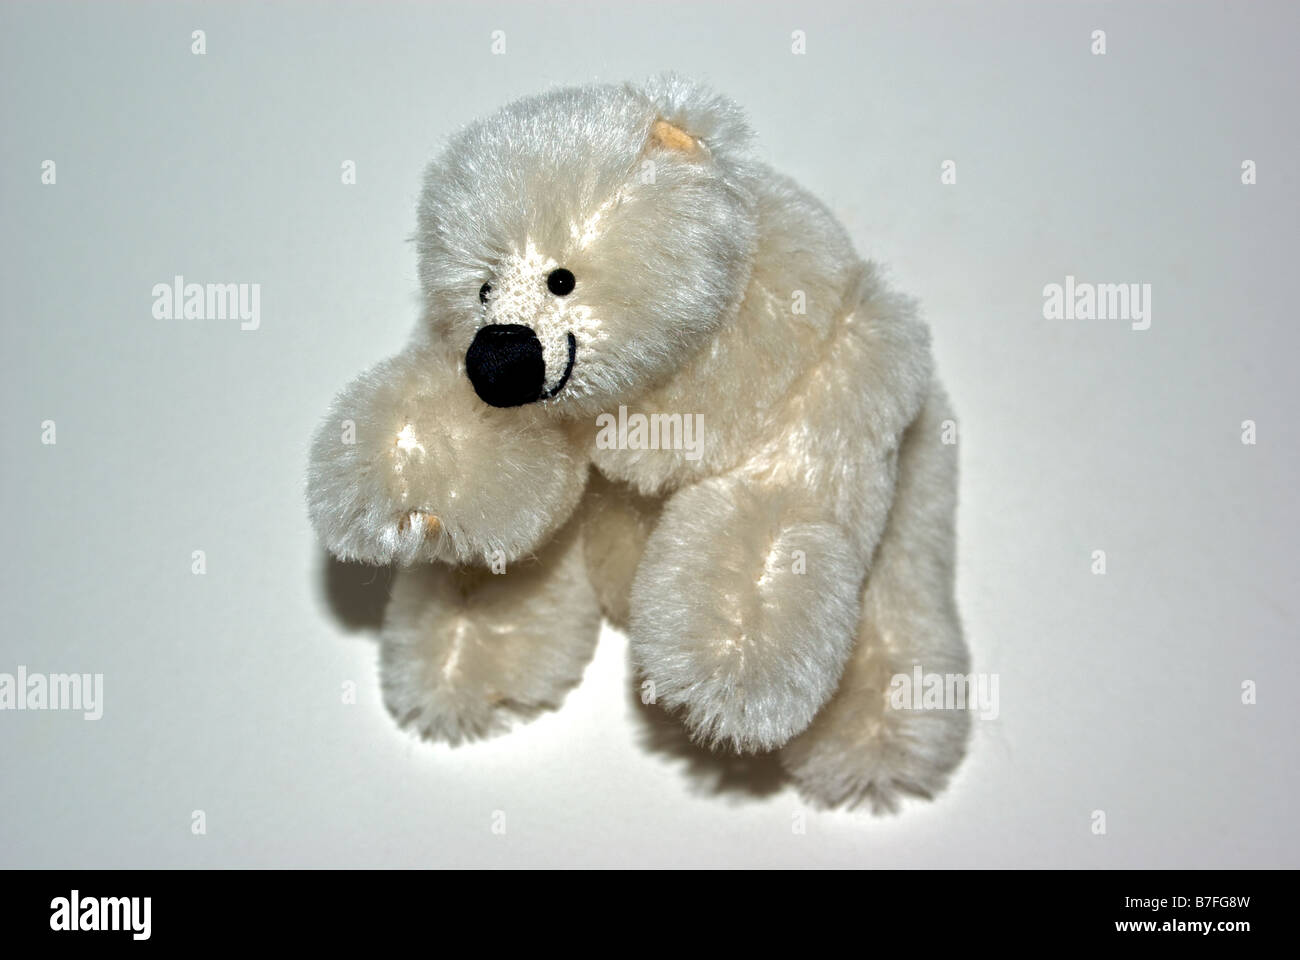 Hand made plush articulated stuffed toy polar bear Stock Photo